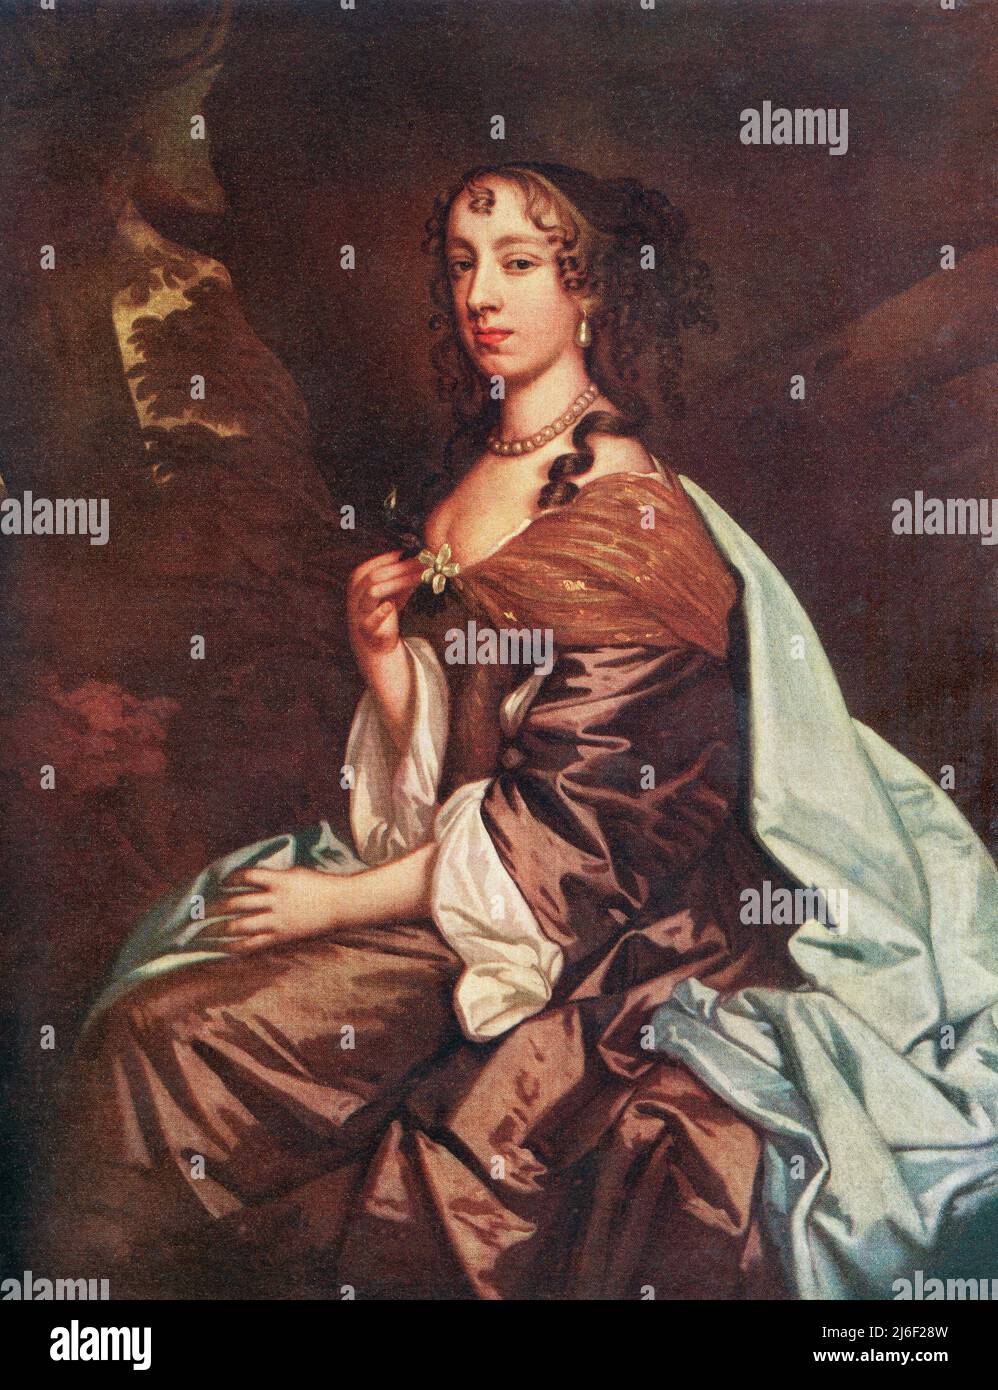 Louise Renée de Penancoët de Kéroualle, Duchess of Portsmouth, 1649 – 1734. Mistress of Charles II of England. From The Connoisseur Illustrated, Sept-Dec 1916. Stock Photo